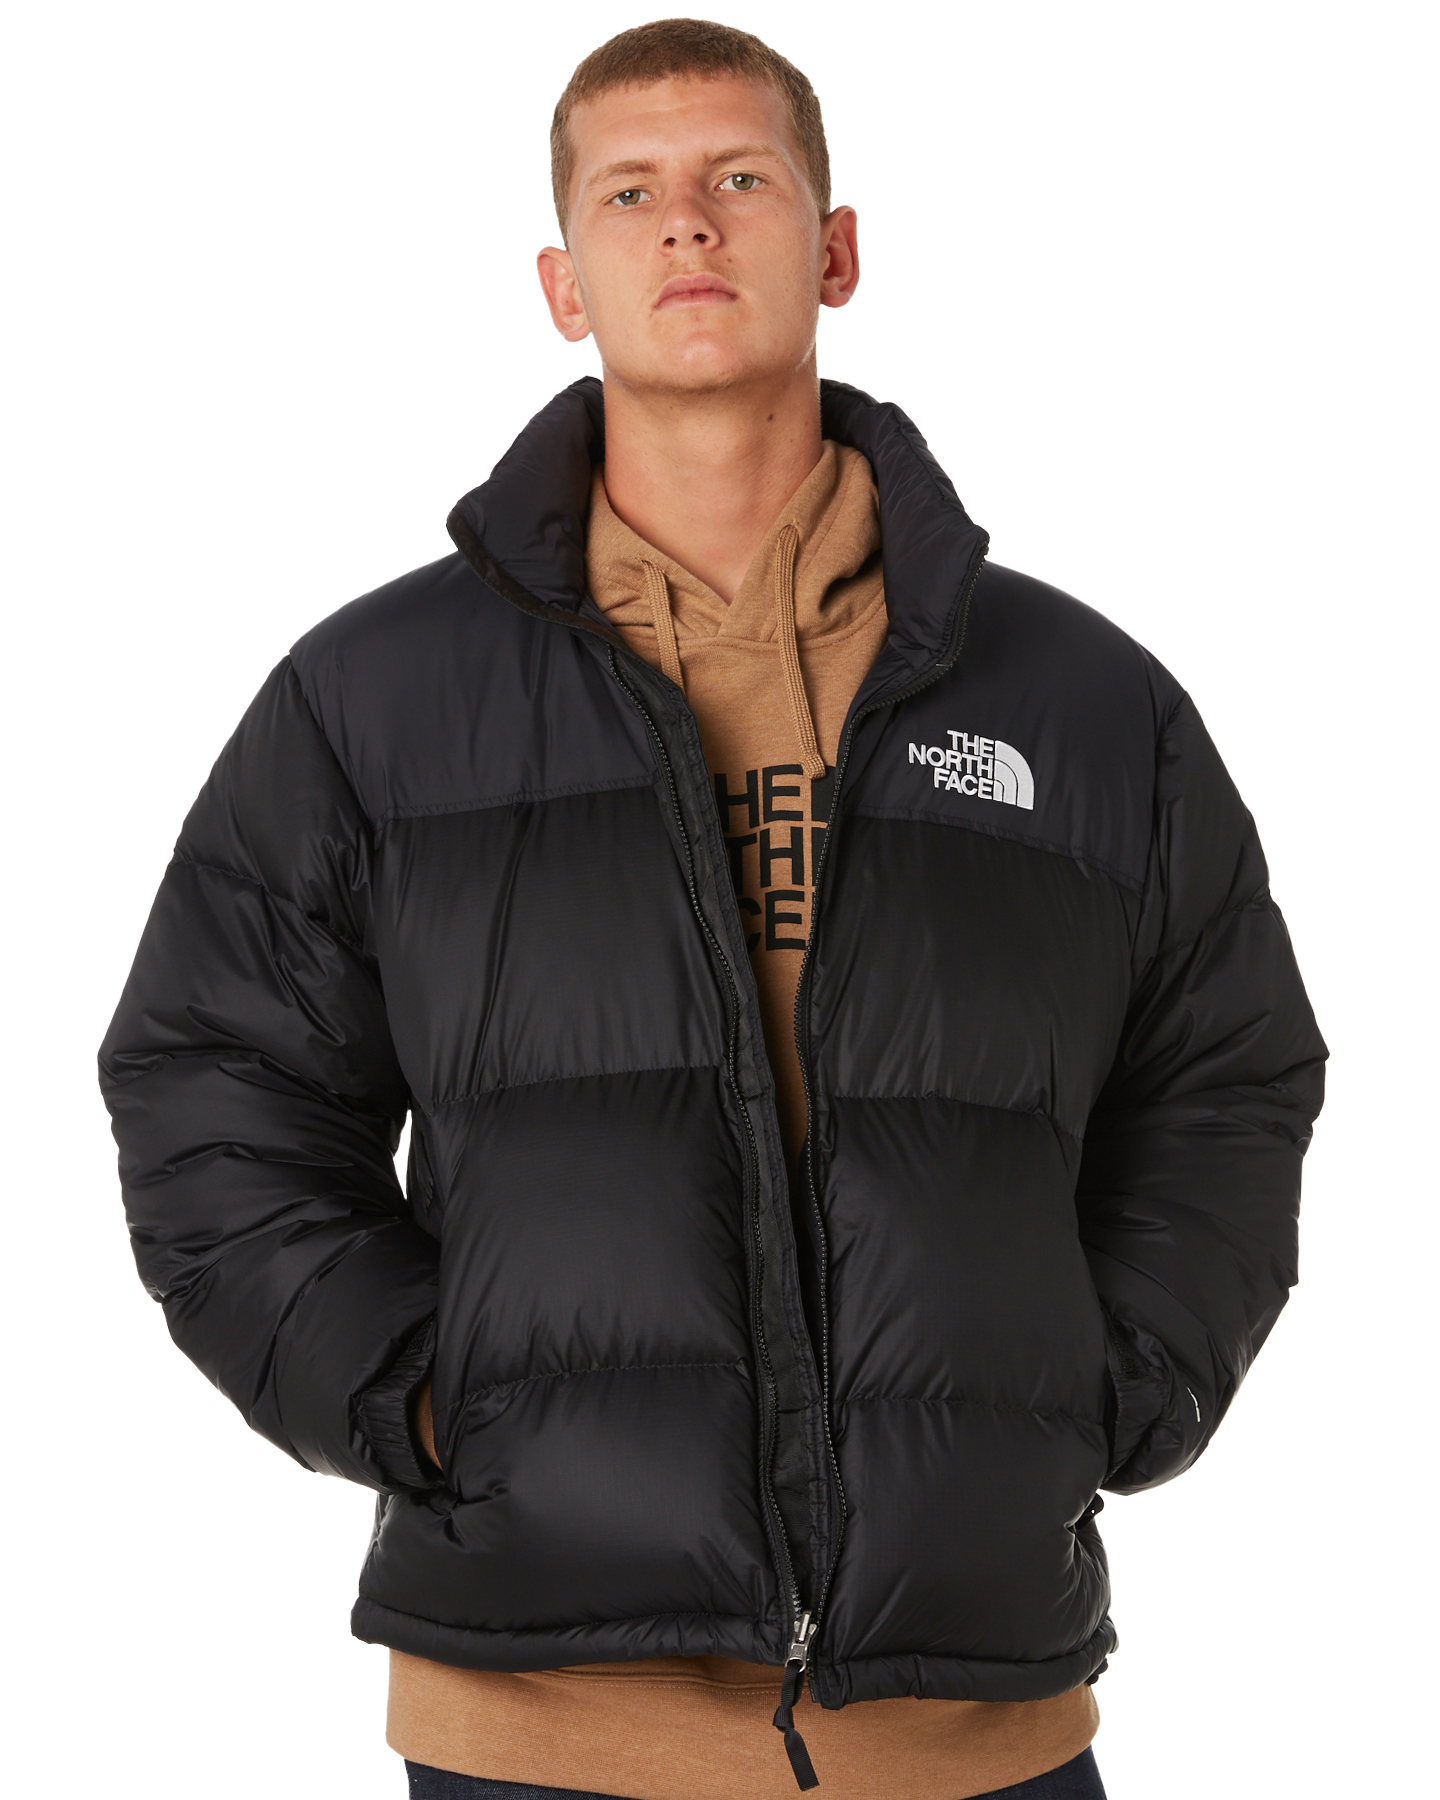 north face 1996 jacket